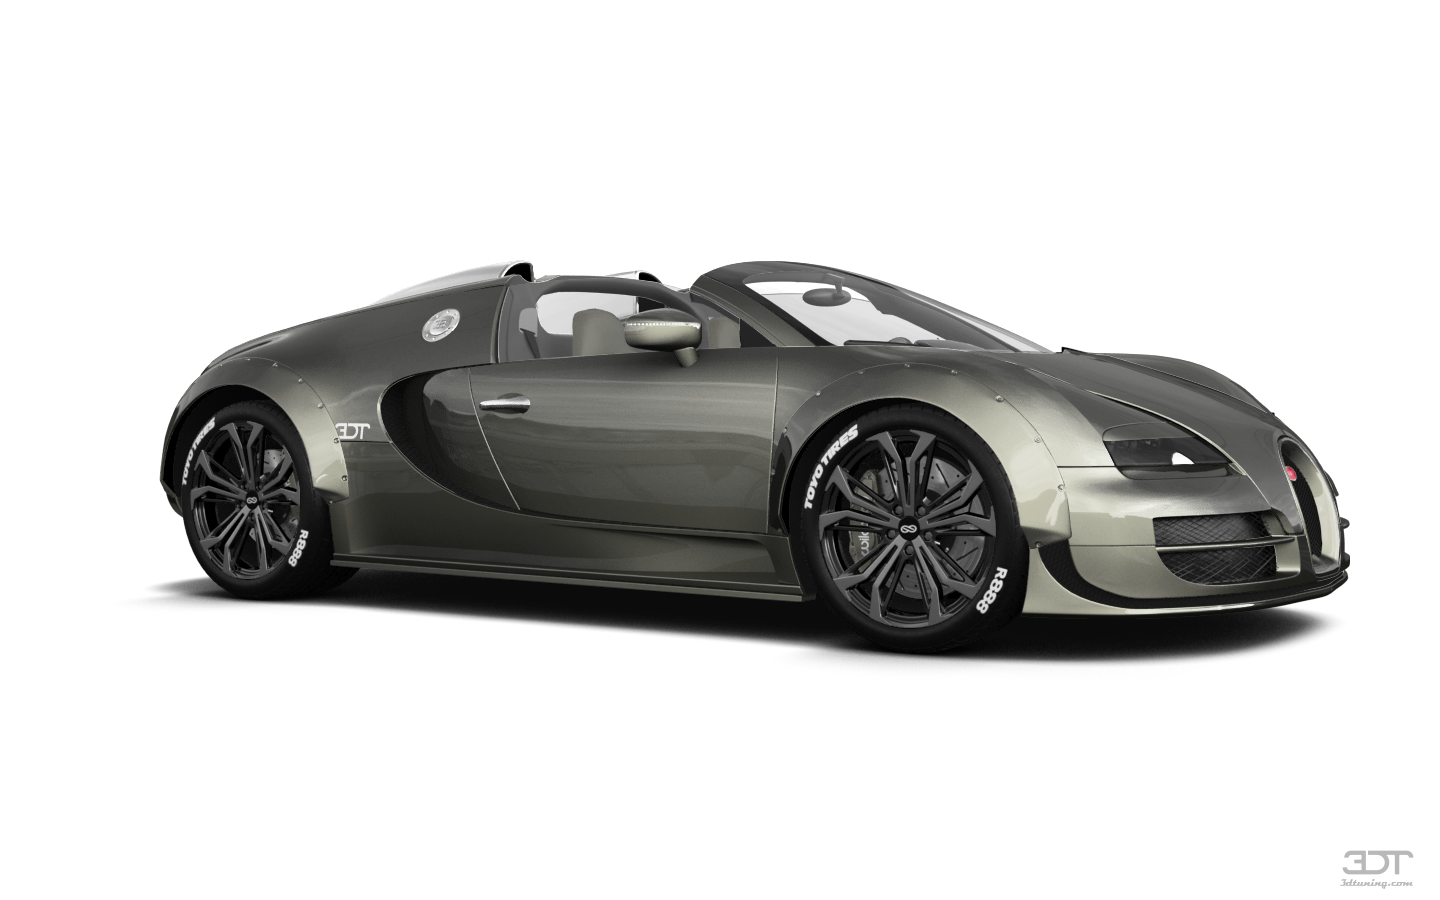 Bugatti Veyron 16.4 Grand Sport Vitesse 2 door targa top 2012